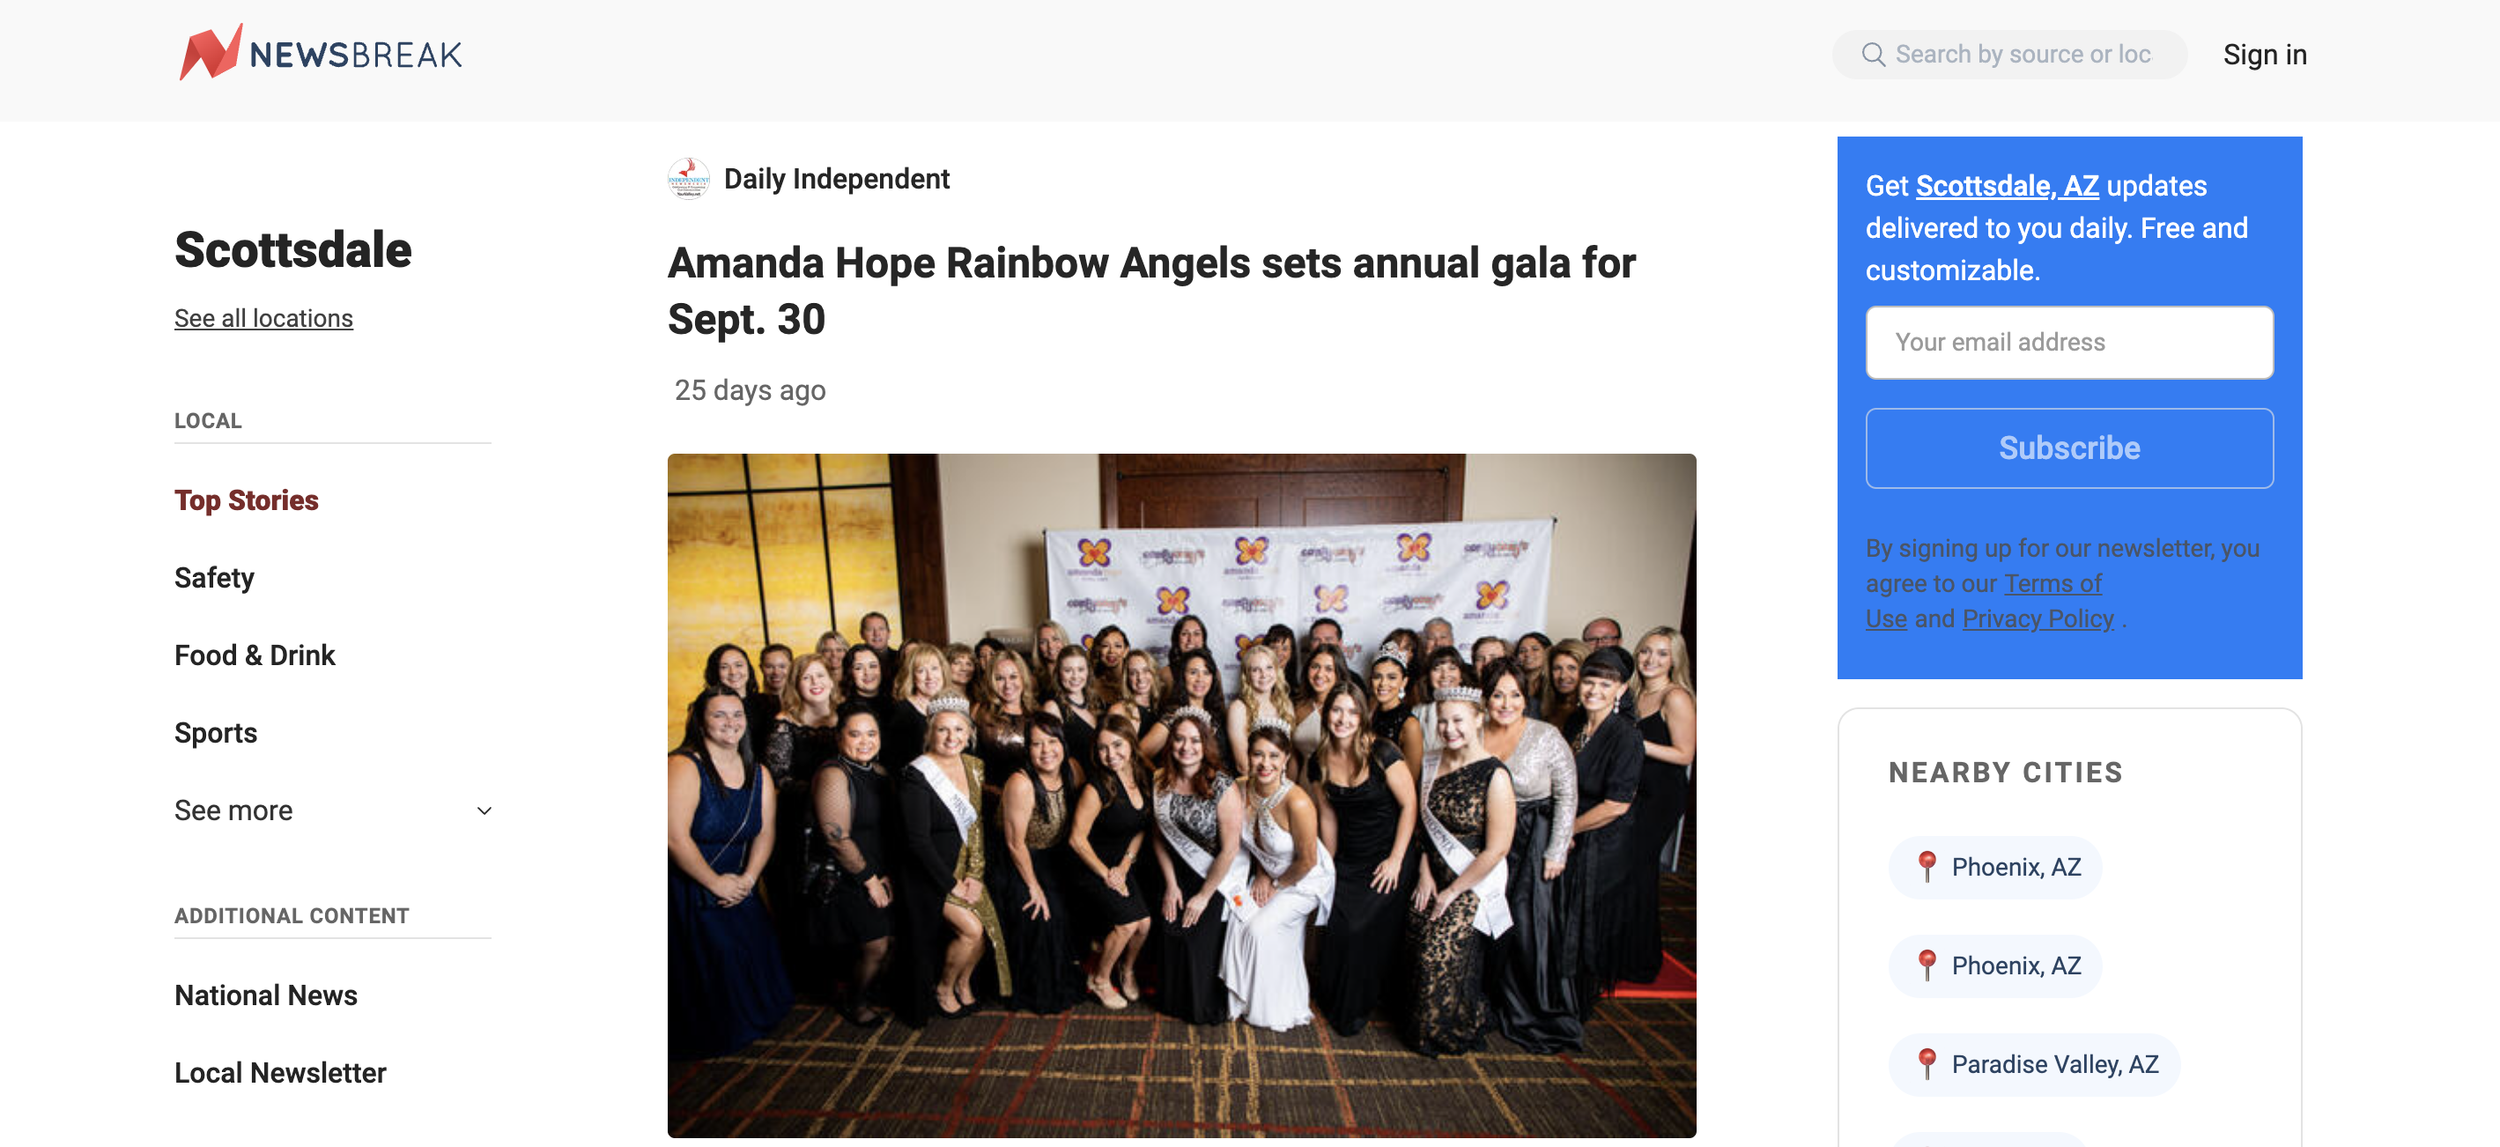 Newsbreak: Amanda Hope Rainbow Angels sets annual gala for Sept. 30 (Copy)